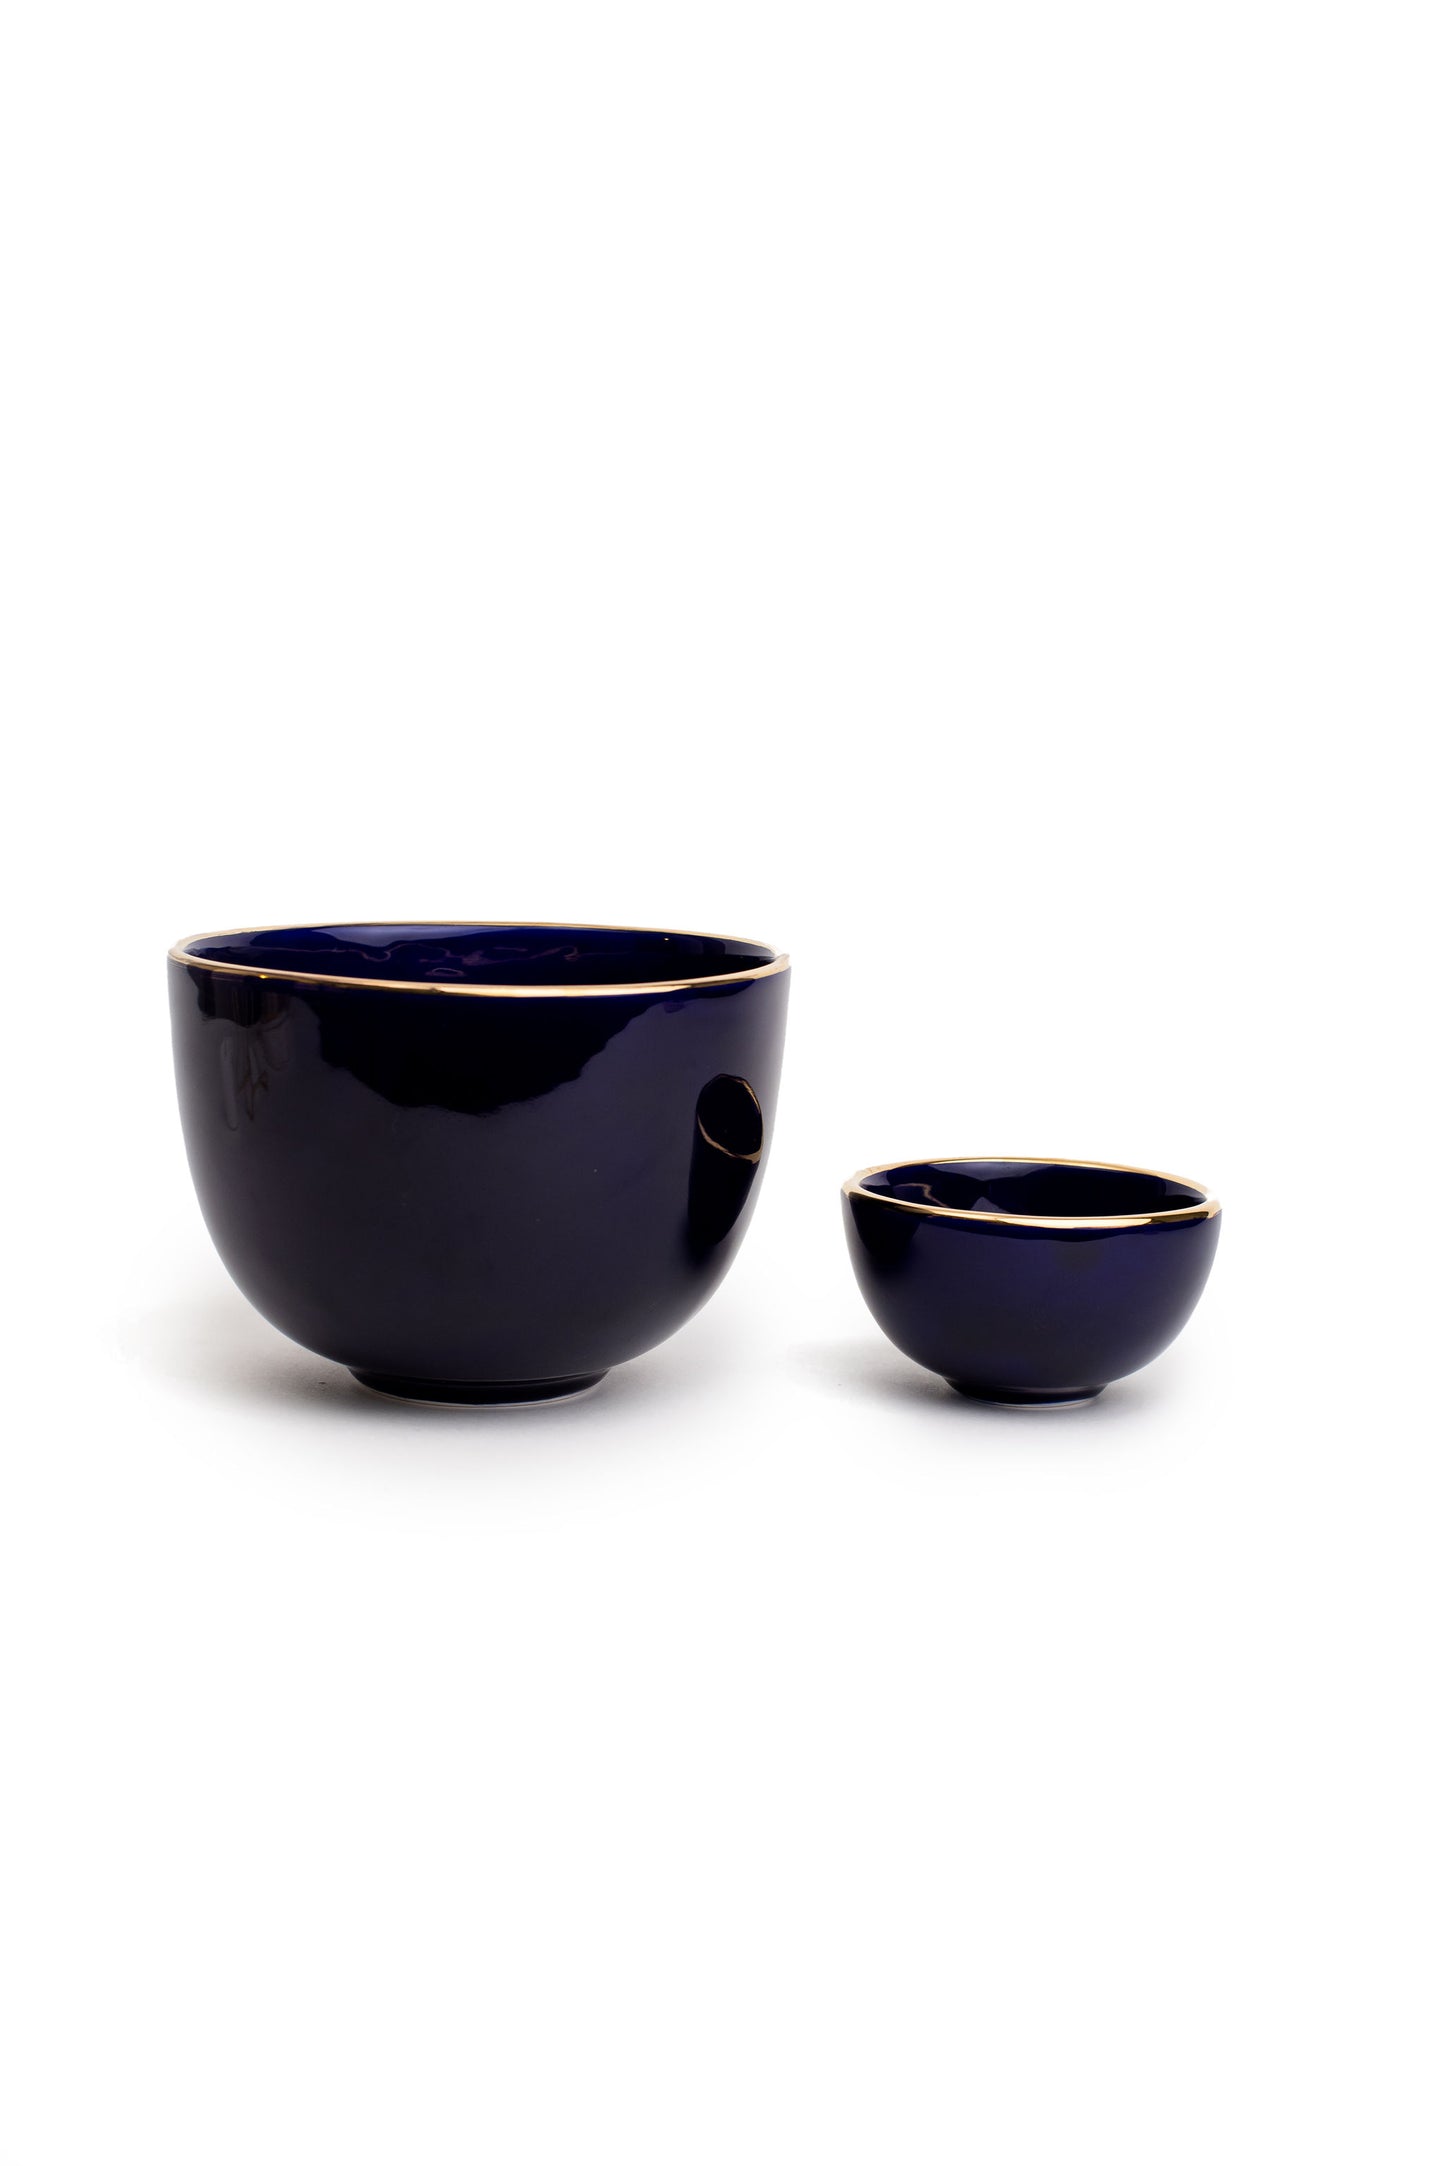 Minimalist Blue Bowl with Gold Edges